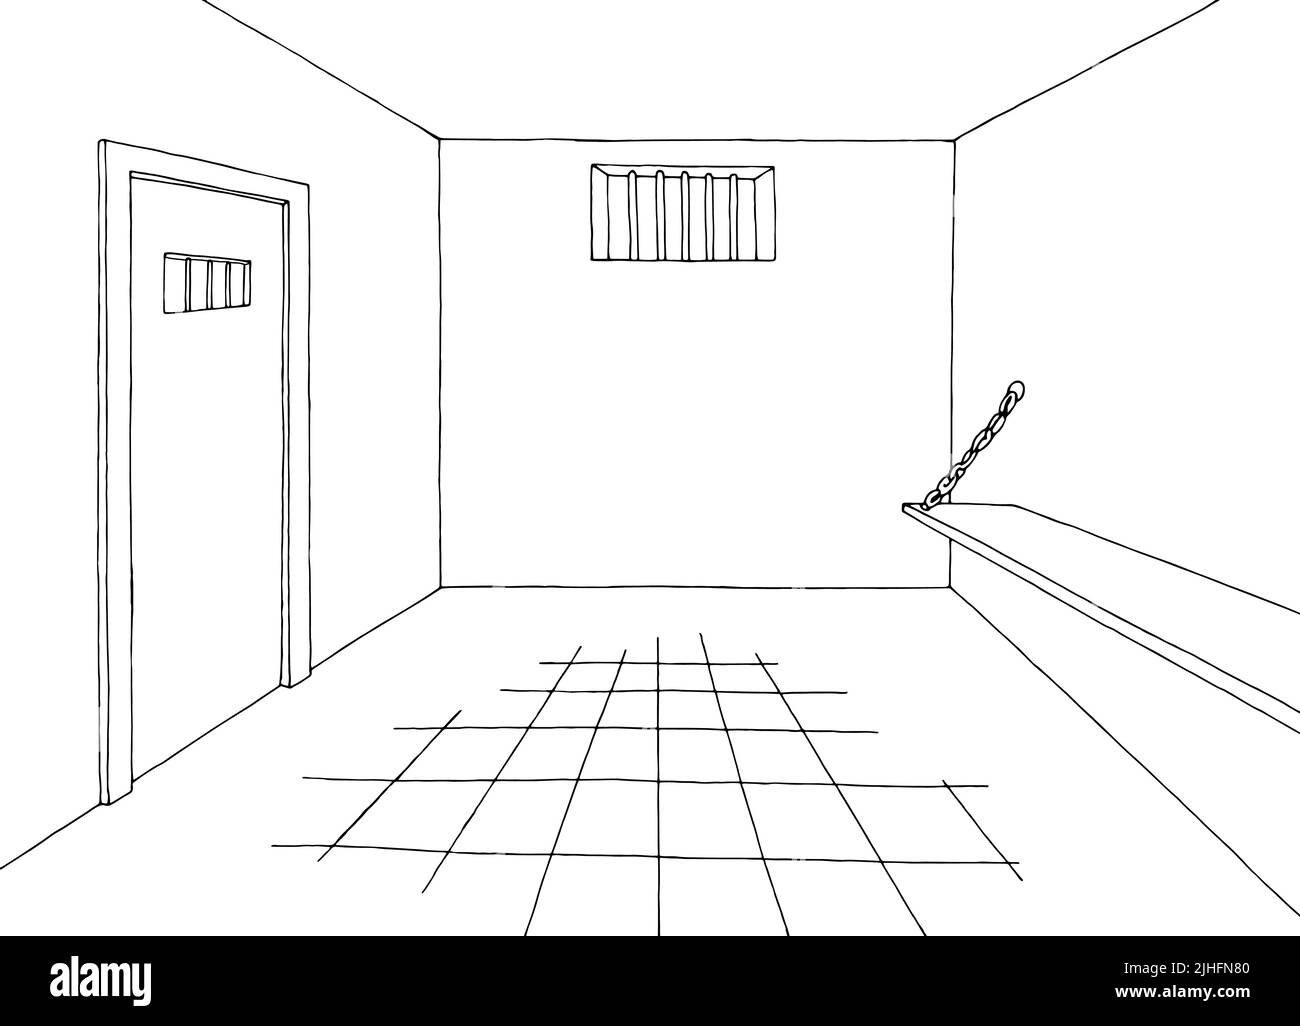 Gefängnis innen Gefängnis Grafik schwarz weiß Skizze Illustration Vektor Stock Vektor